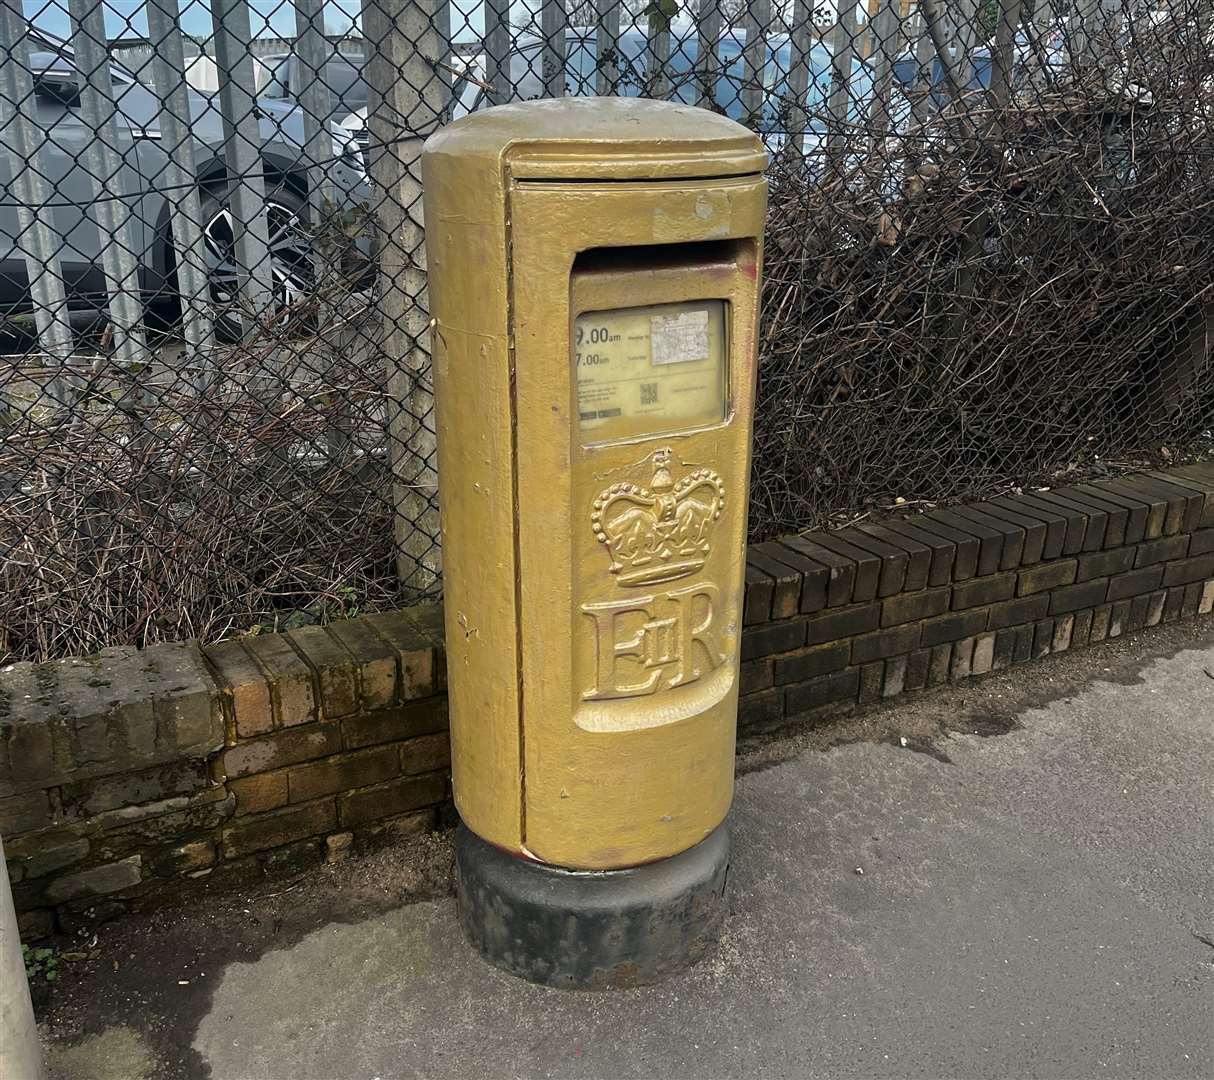 This postbox in Burnham Road, Dartford has been left gold